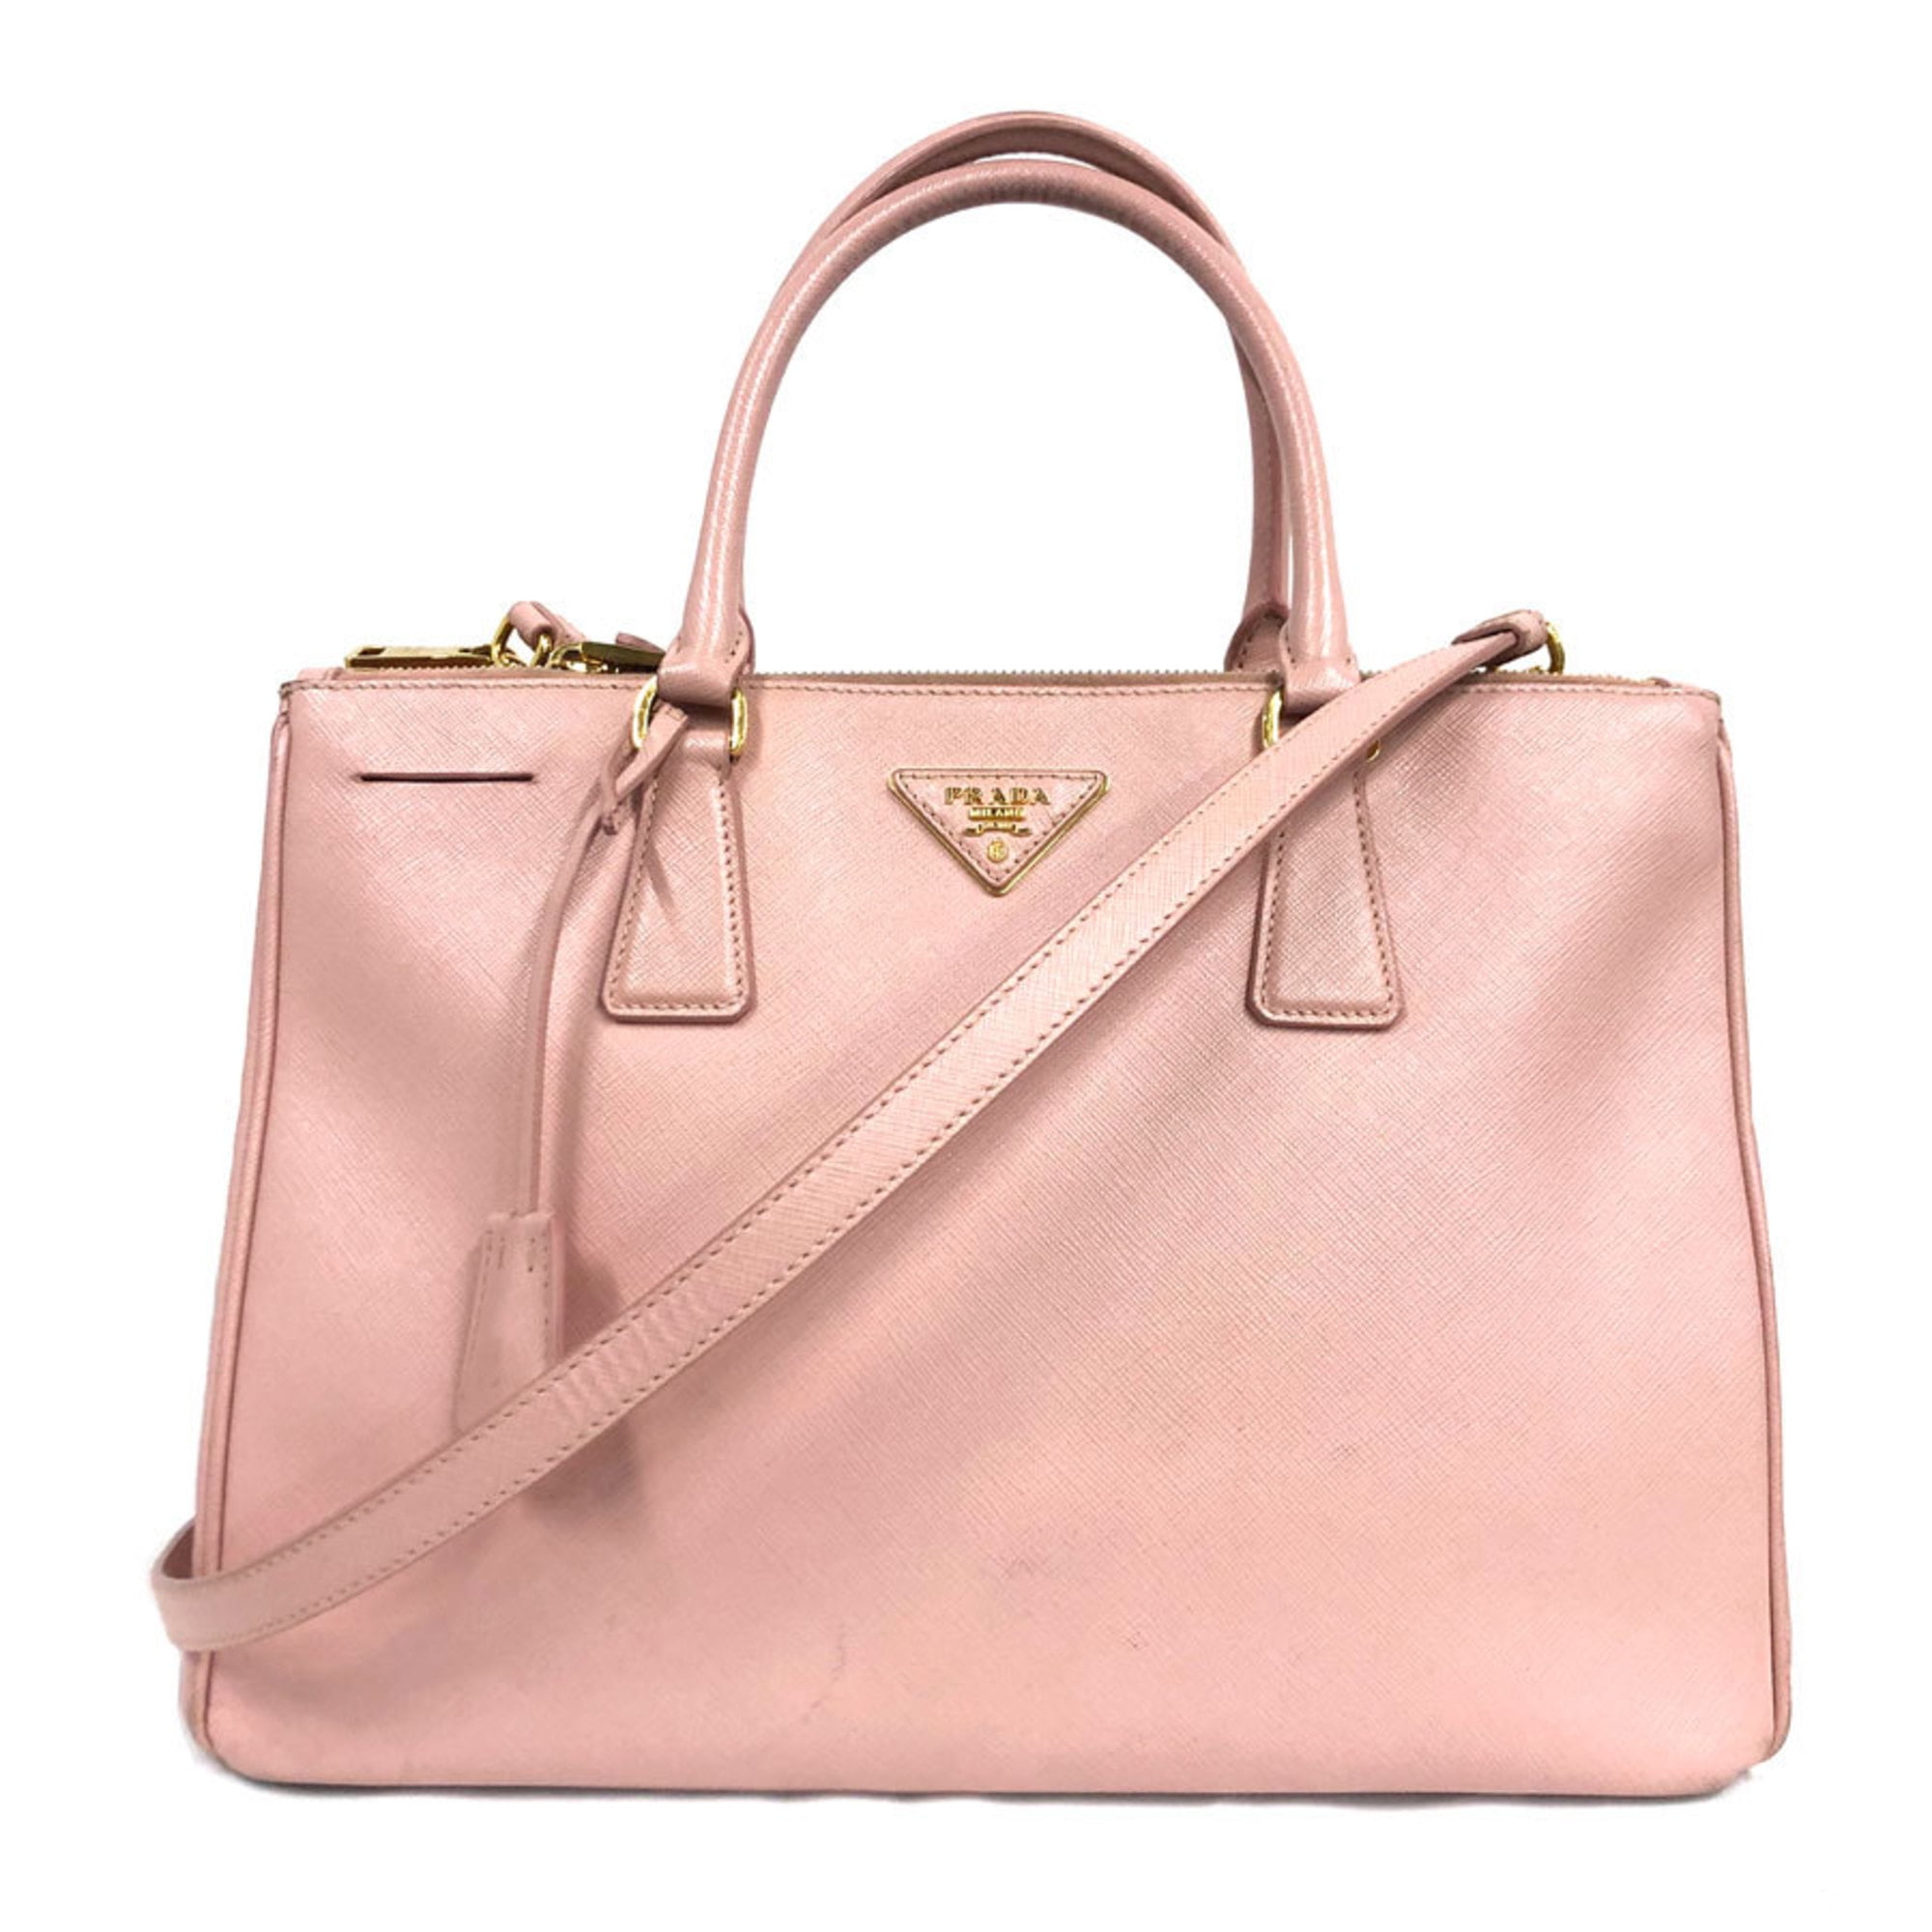 Prada Zip Pochette Shoulder Bag Saffiano Leather Mini Pink | eBay